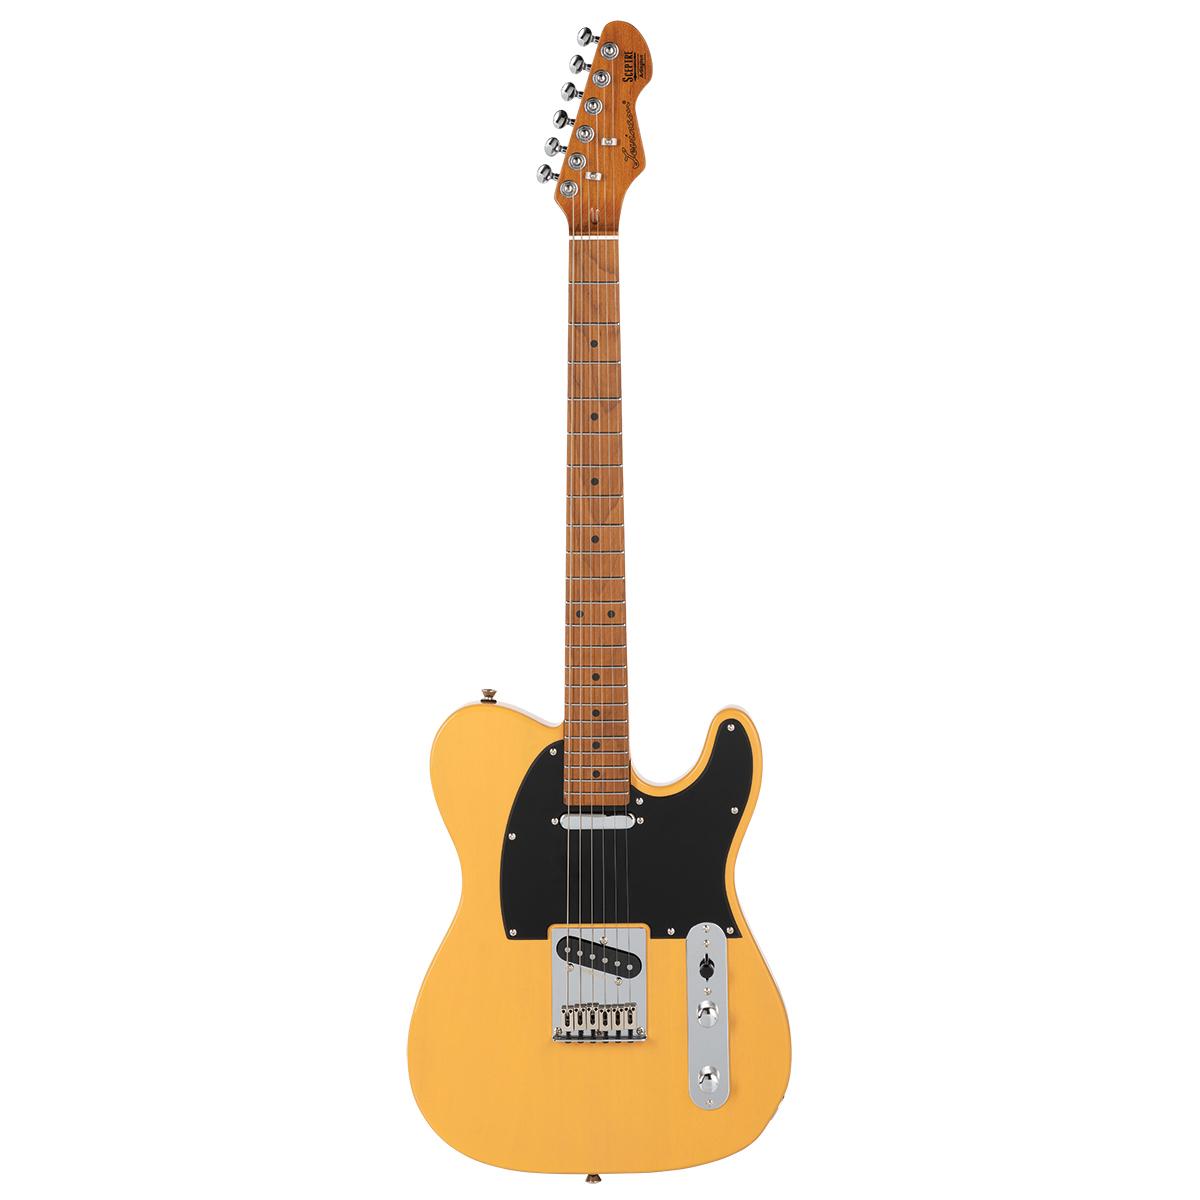 Levinson Sceptre Arlington Standard Electric Guitar SS Maple FB Blonde